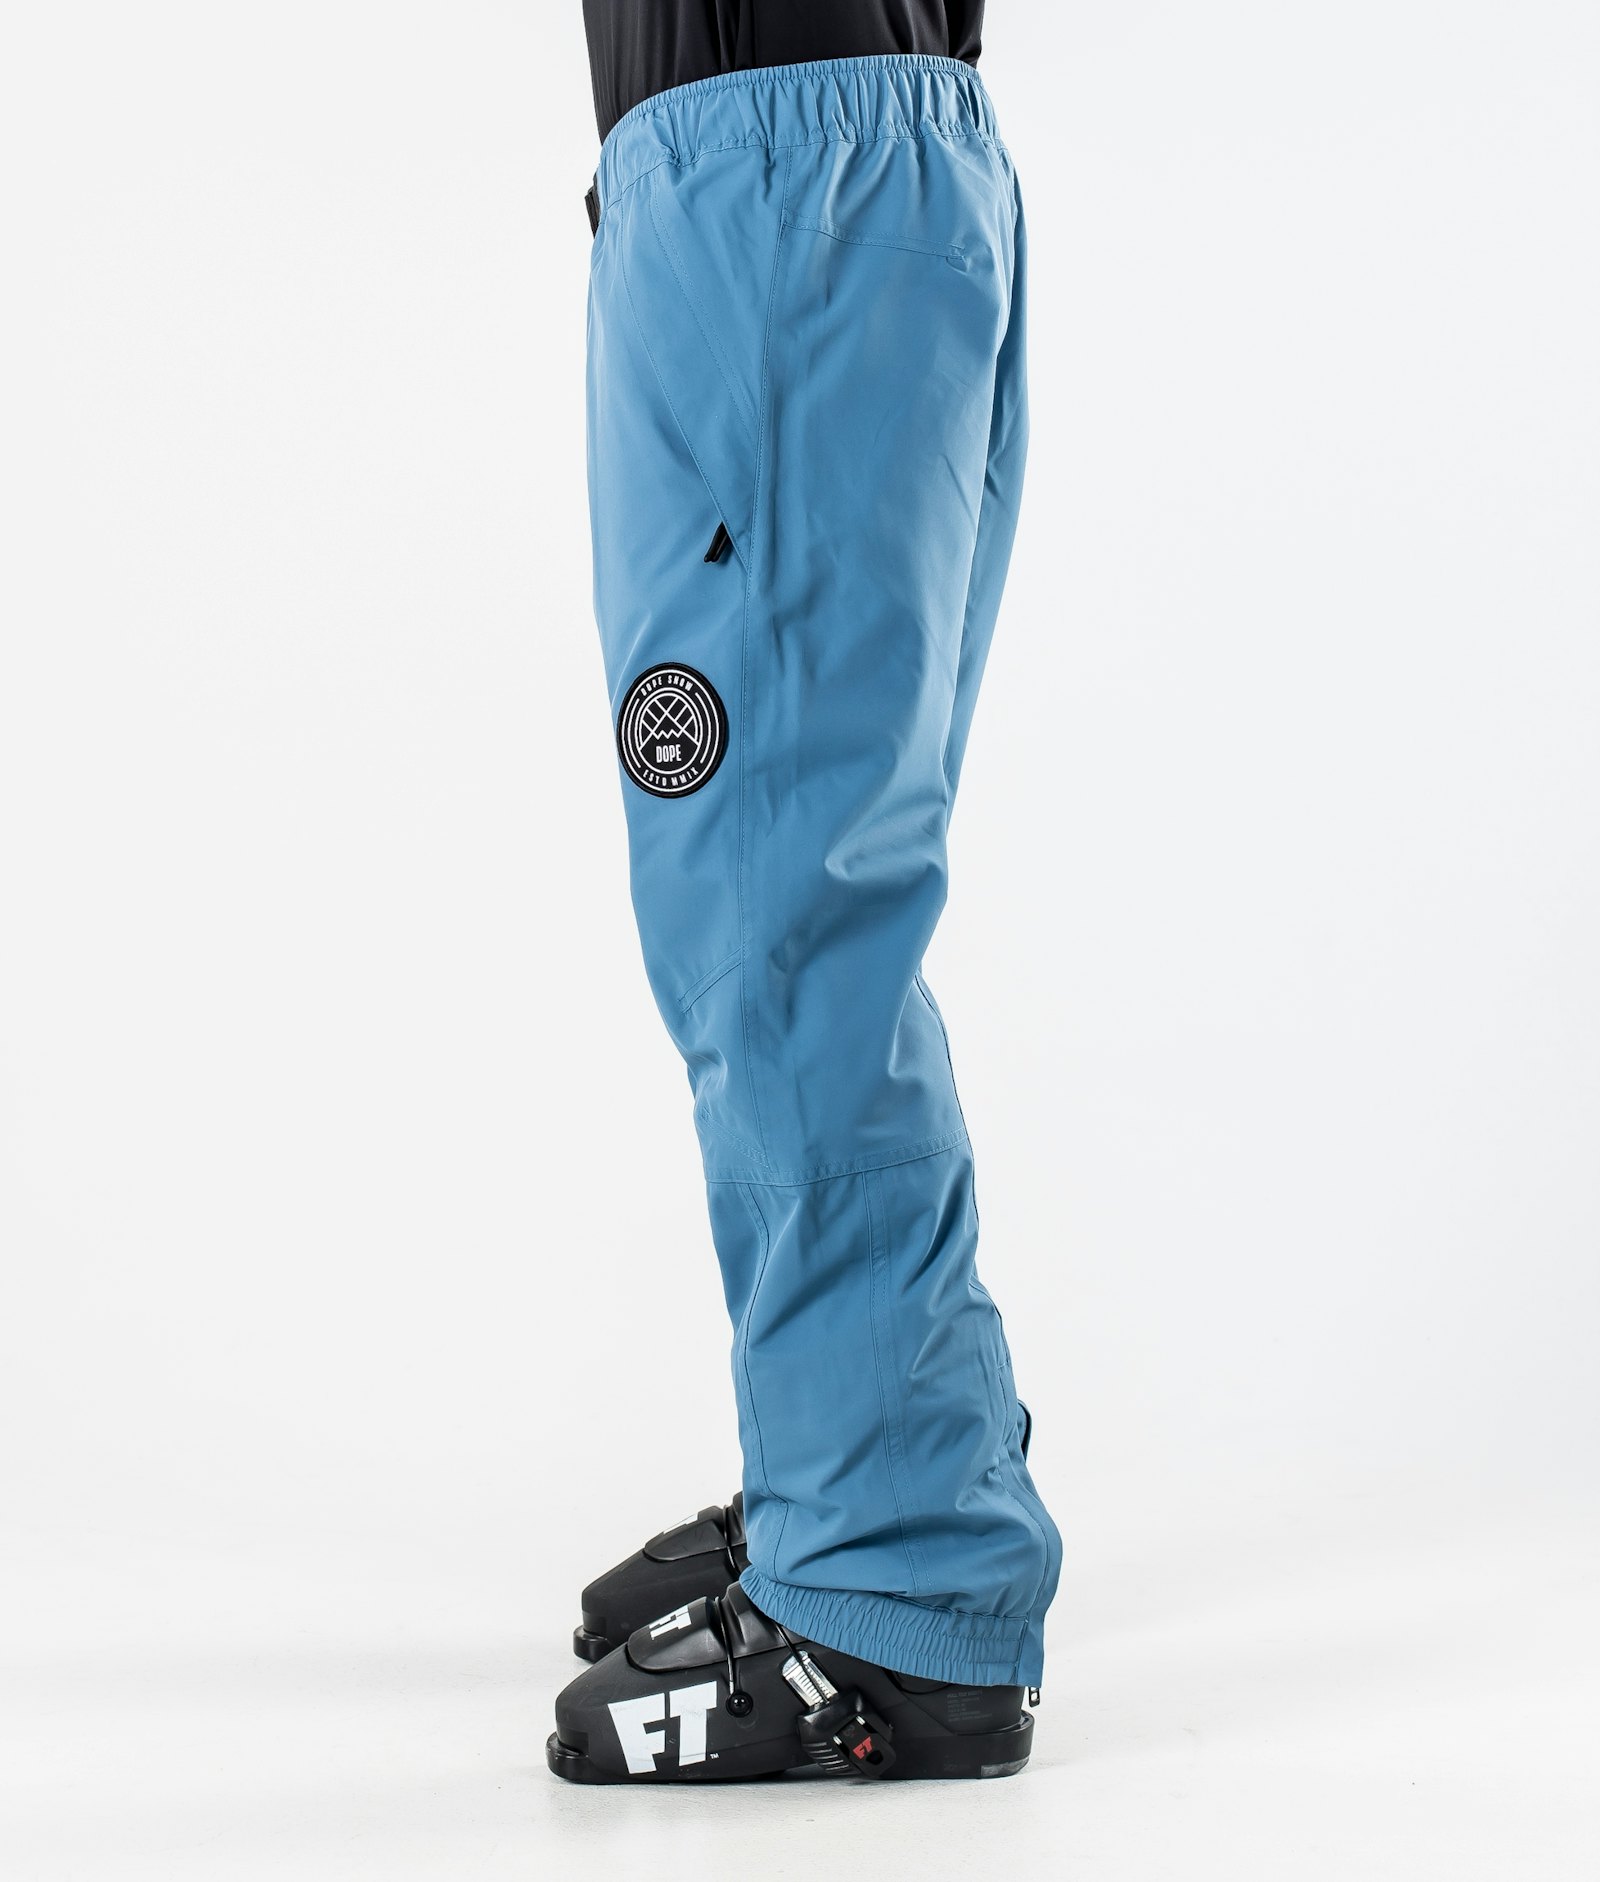 Blizzard 2020 Pantalon de Ski Homme Blue Steel